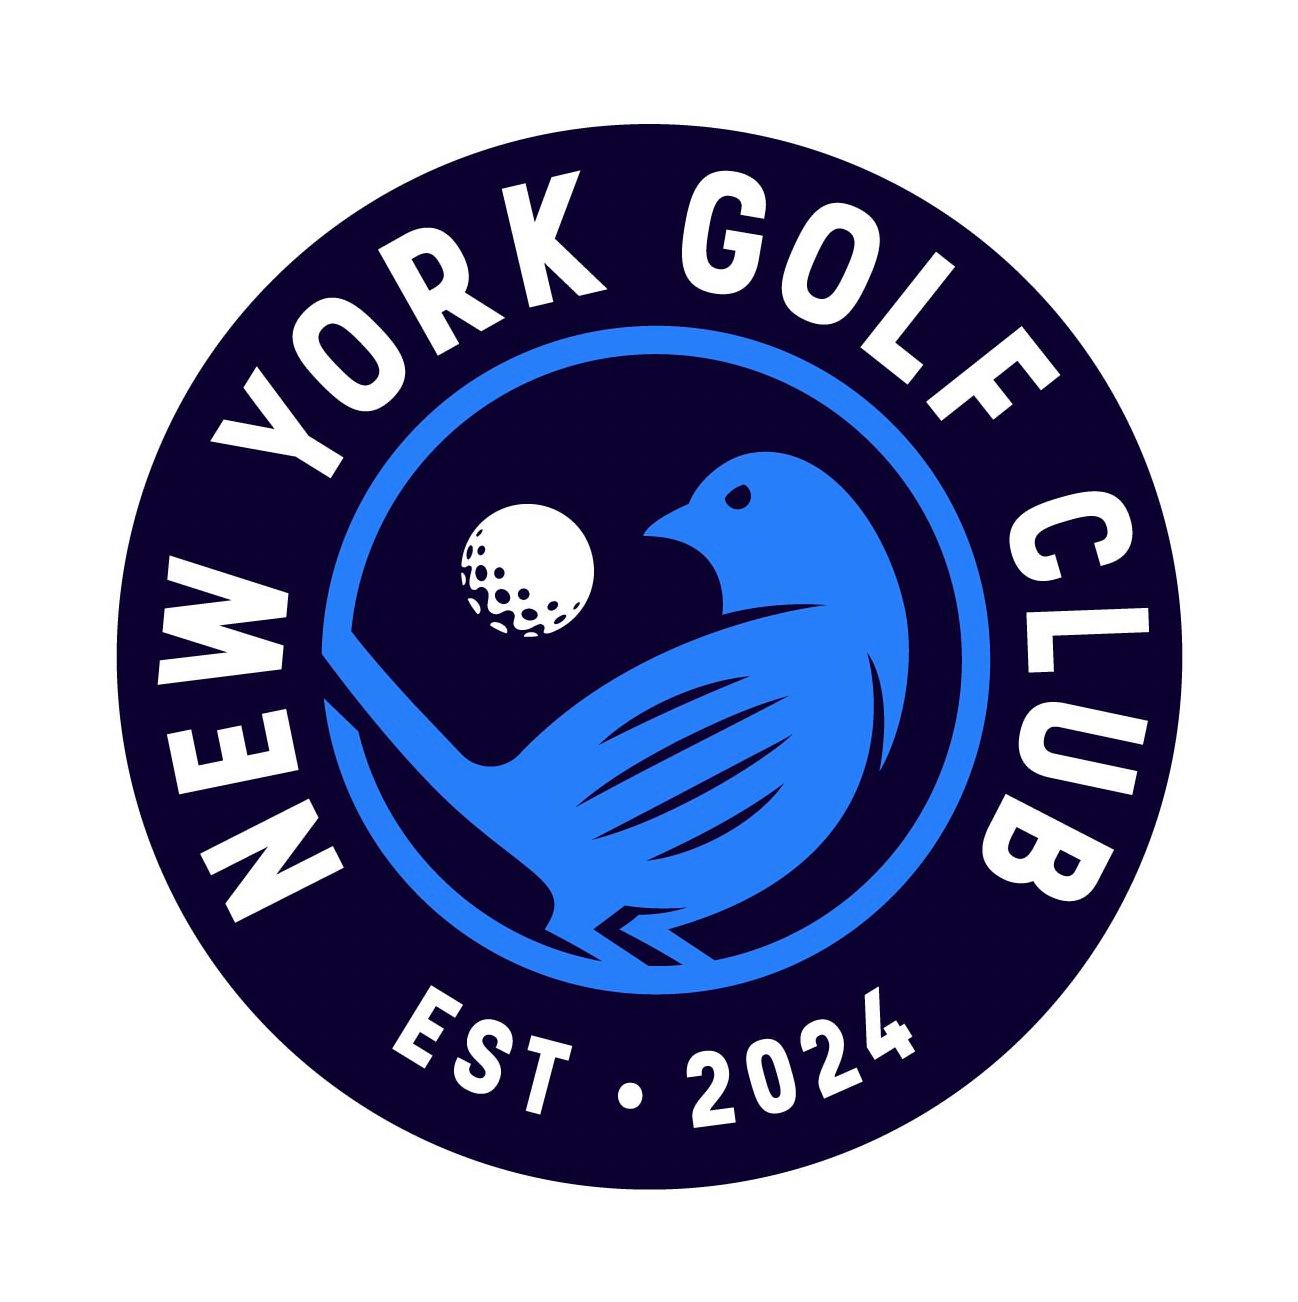  NEW YORK GOLF CLUB EST. 2024